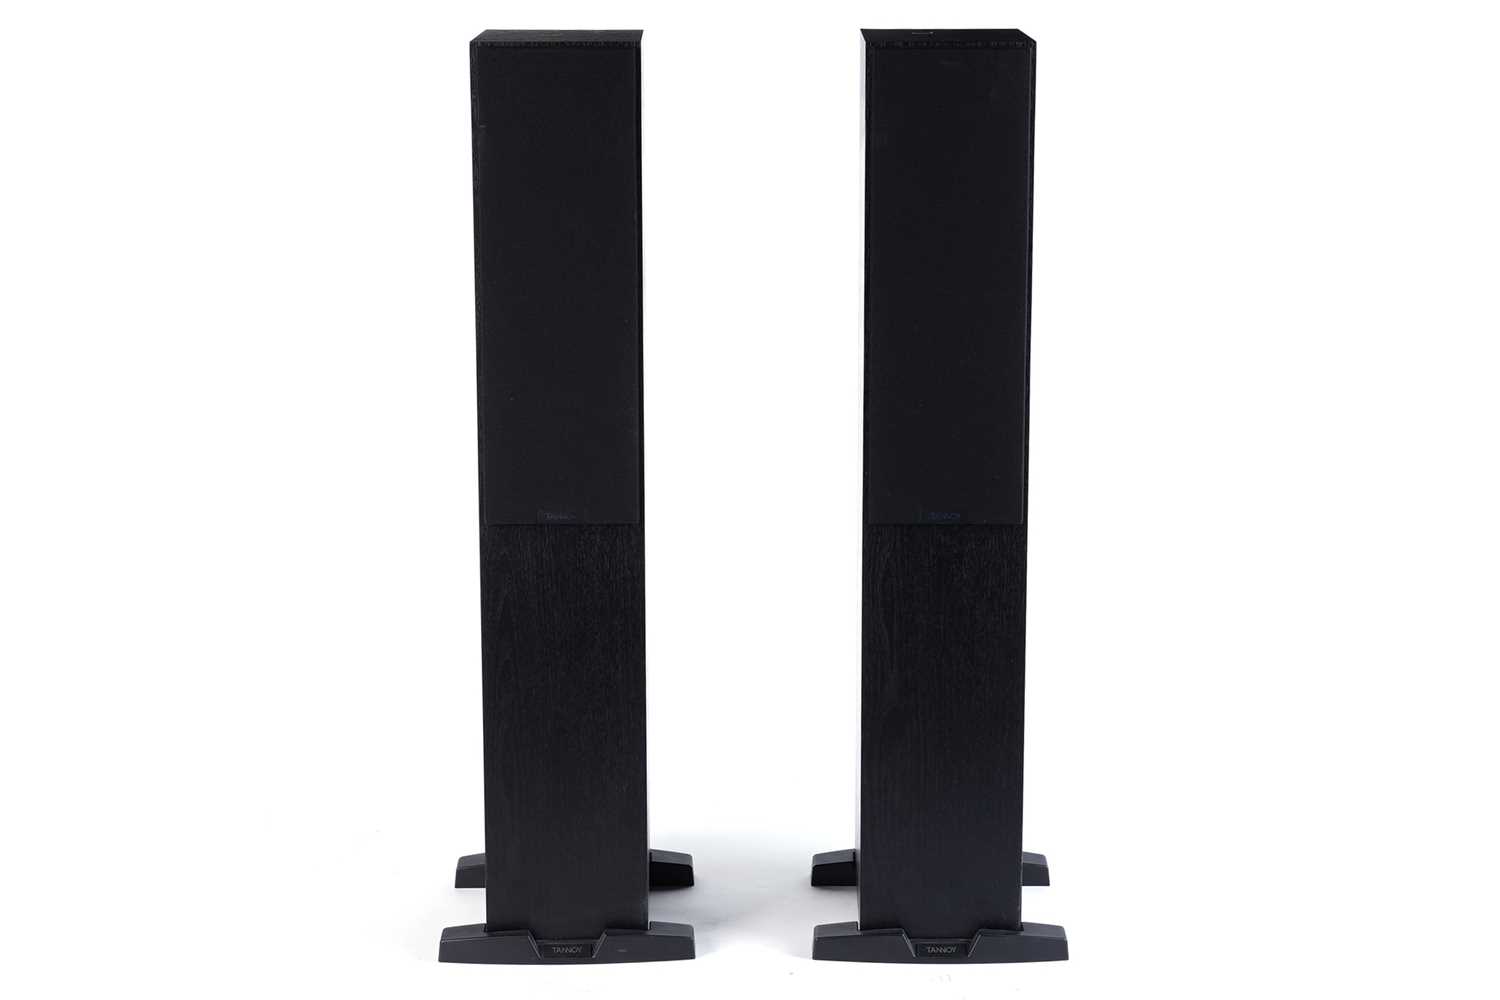 A pair of Tannoy floor-standing speakers